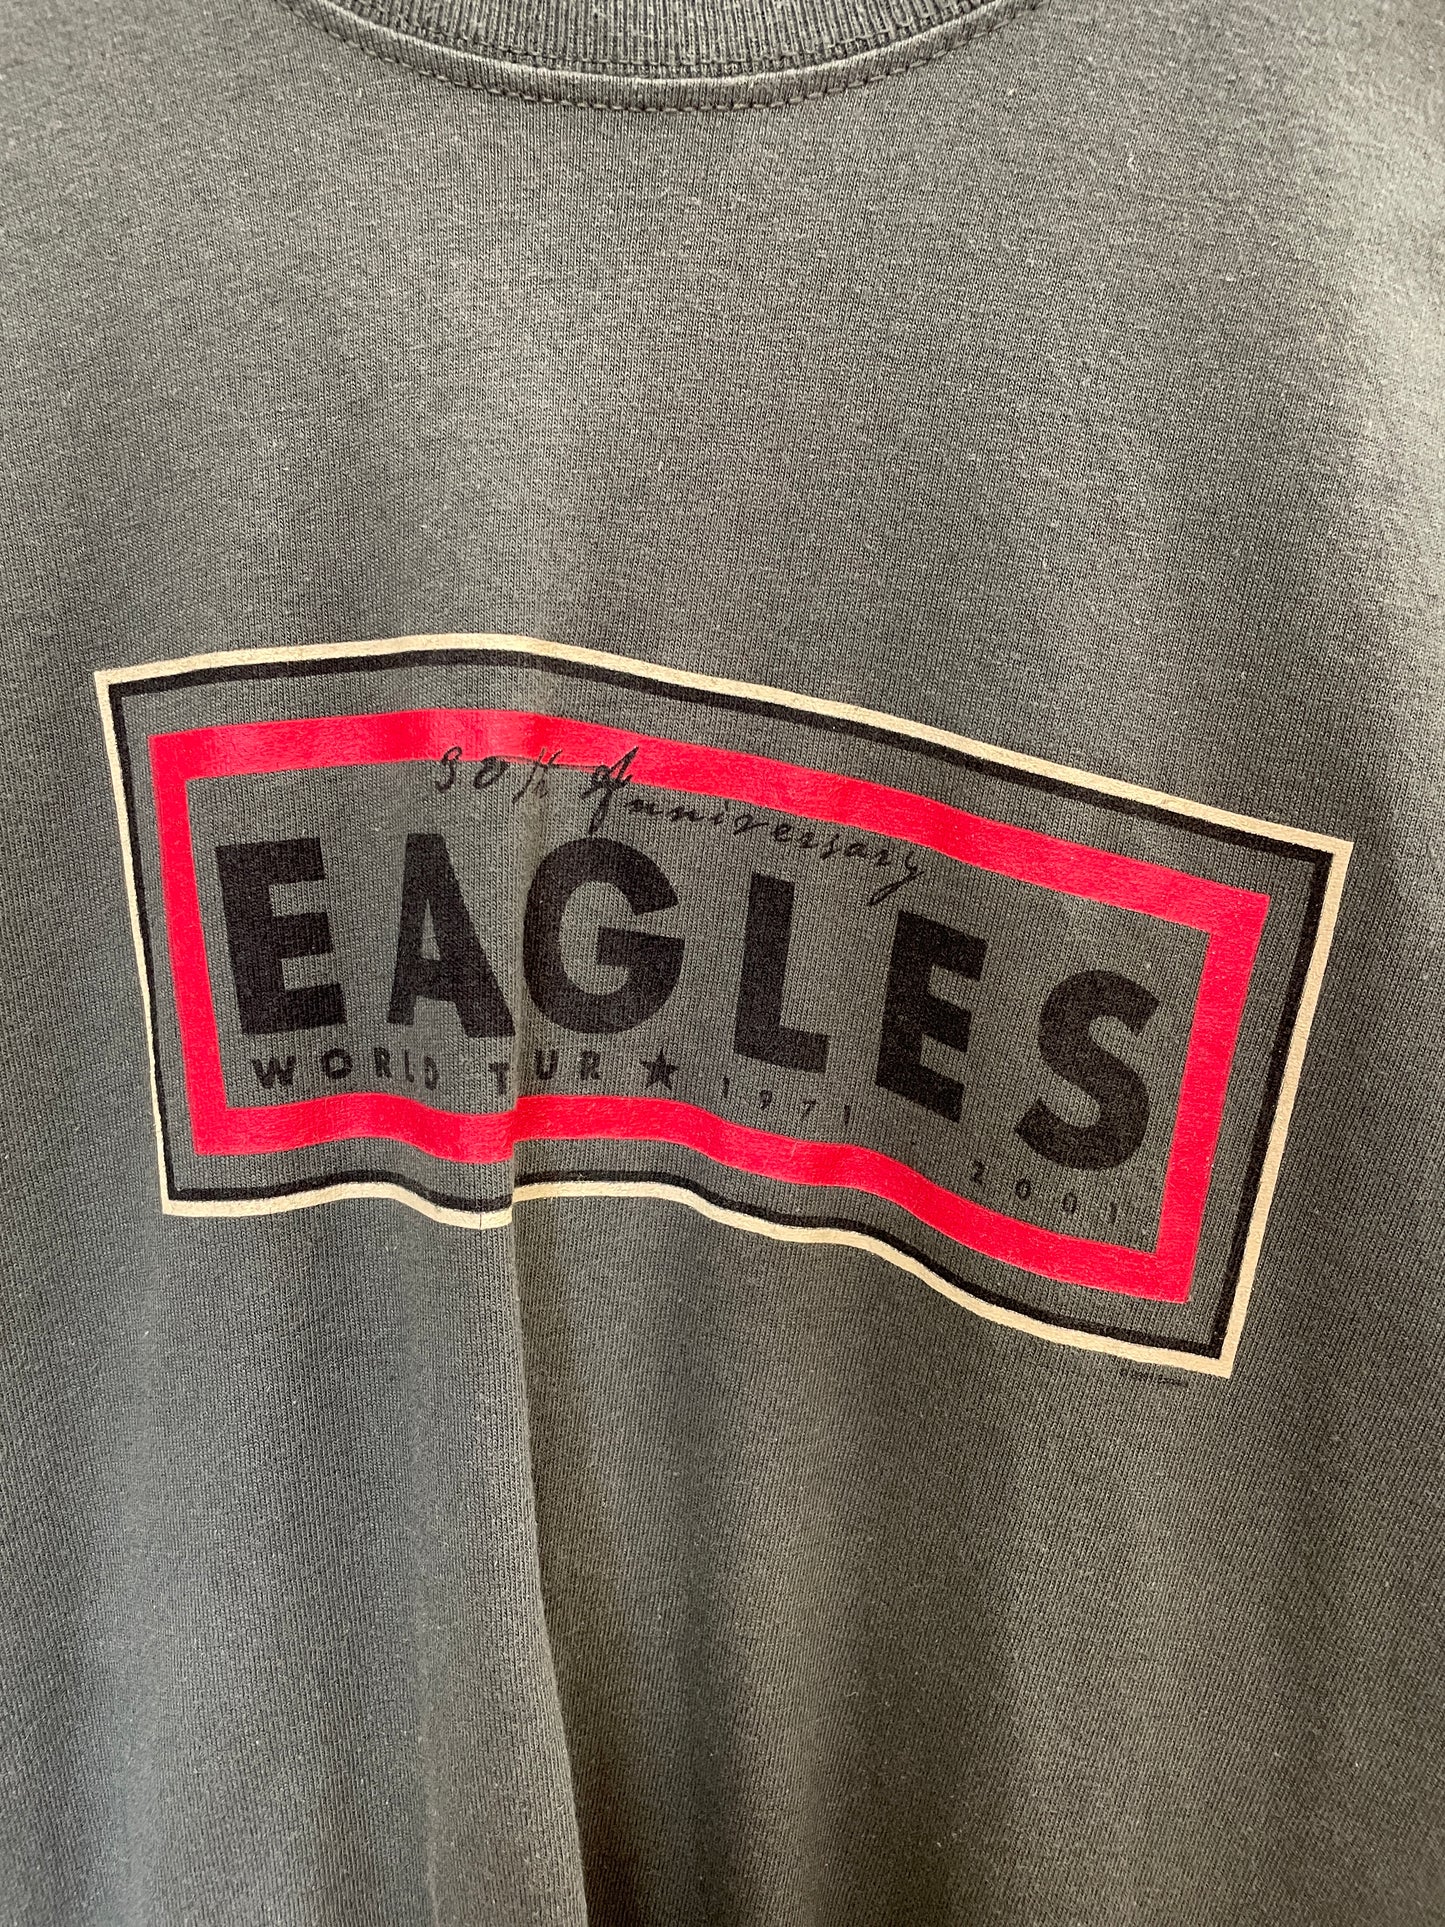 Eagles 30th Anniversary Tour 2001 2002 Screen Stars Merchandise Green T Shirt Medium